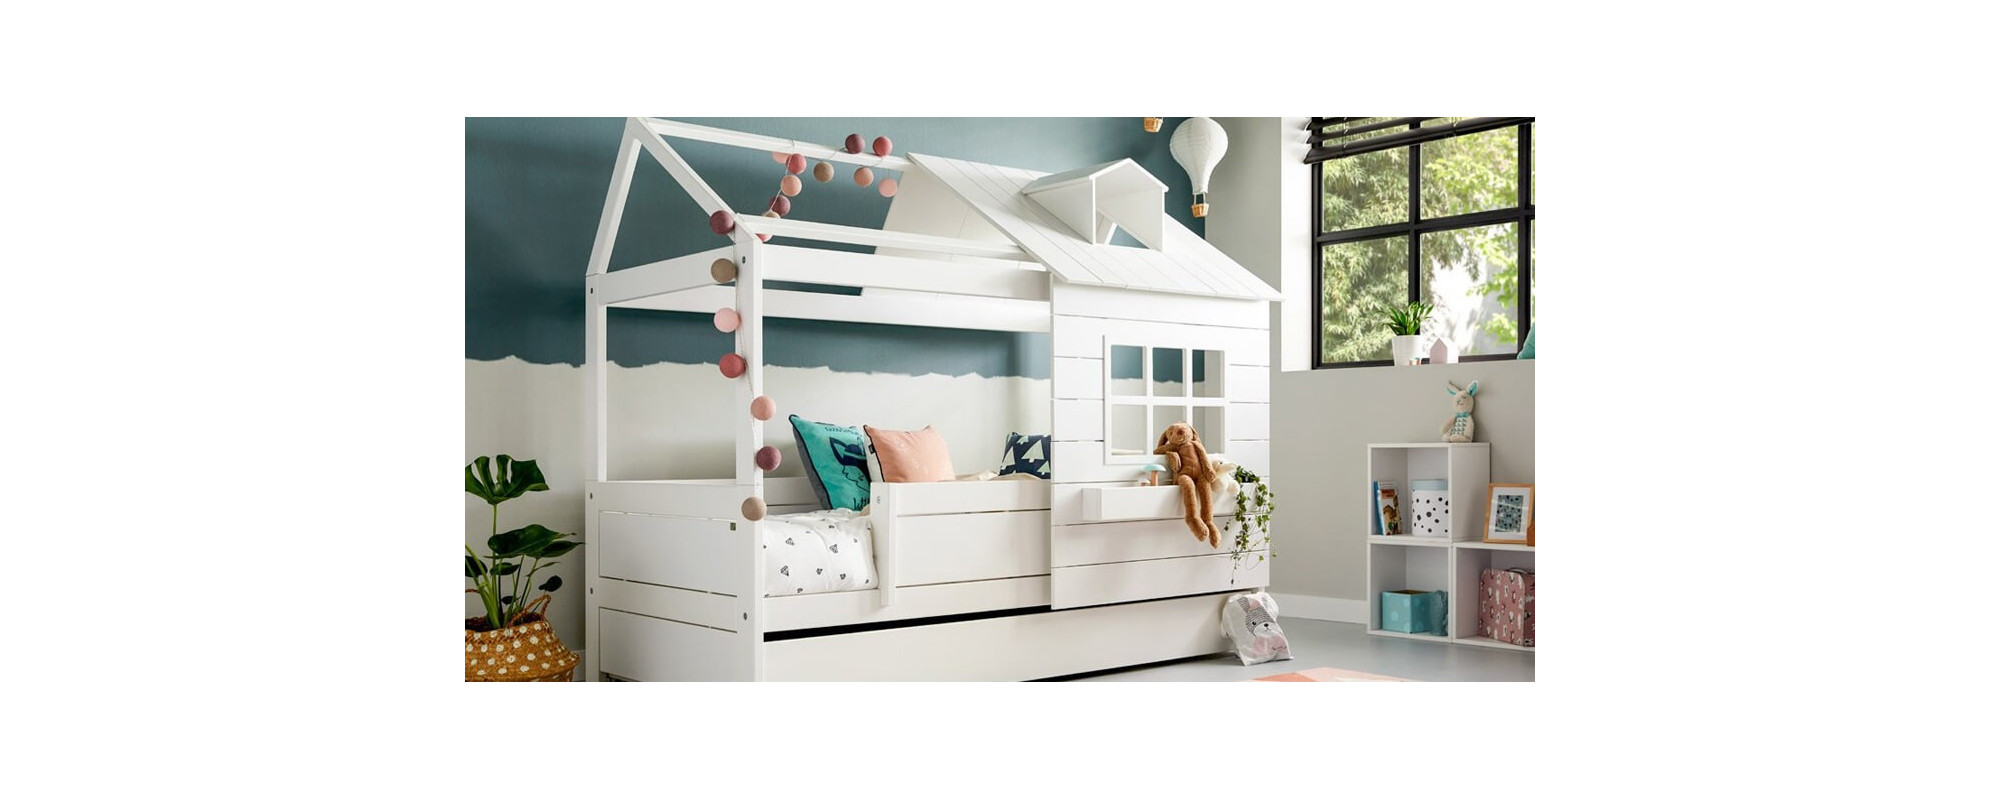 baby loft bed, children bunk bed, children's mattresses & more